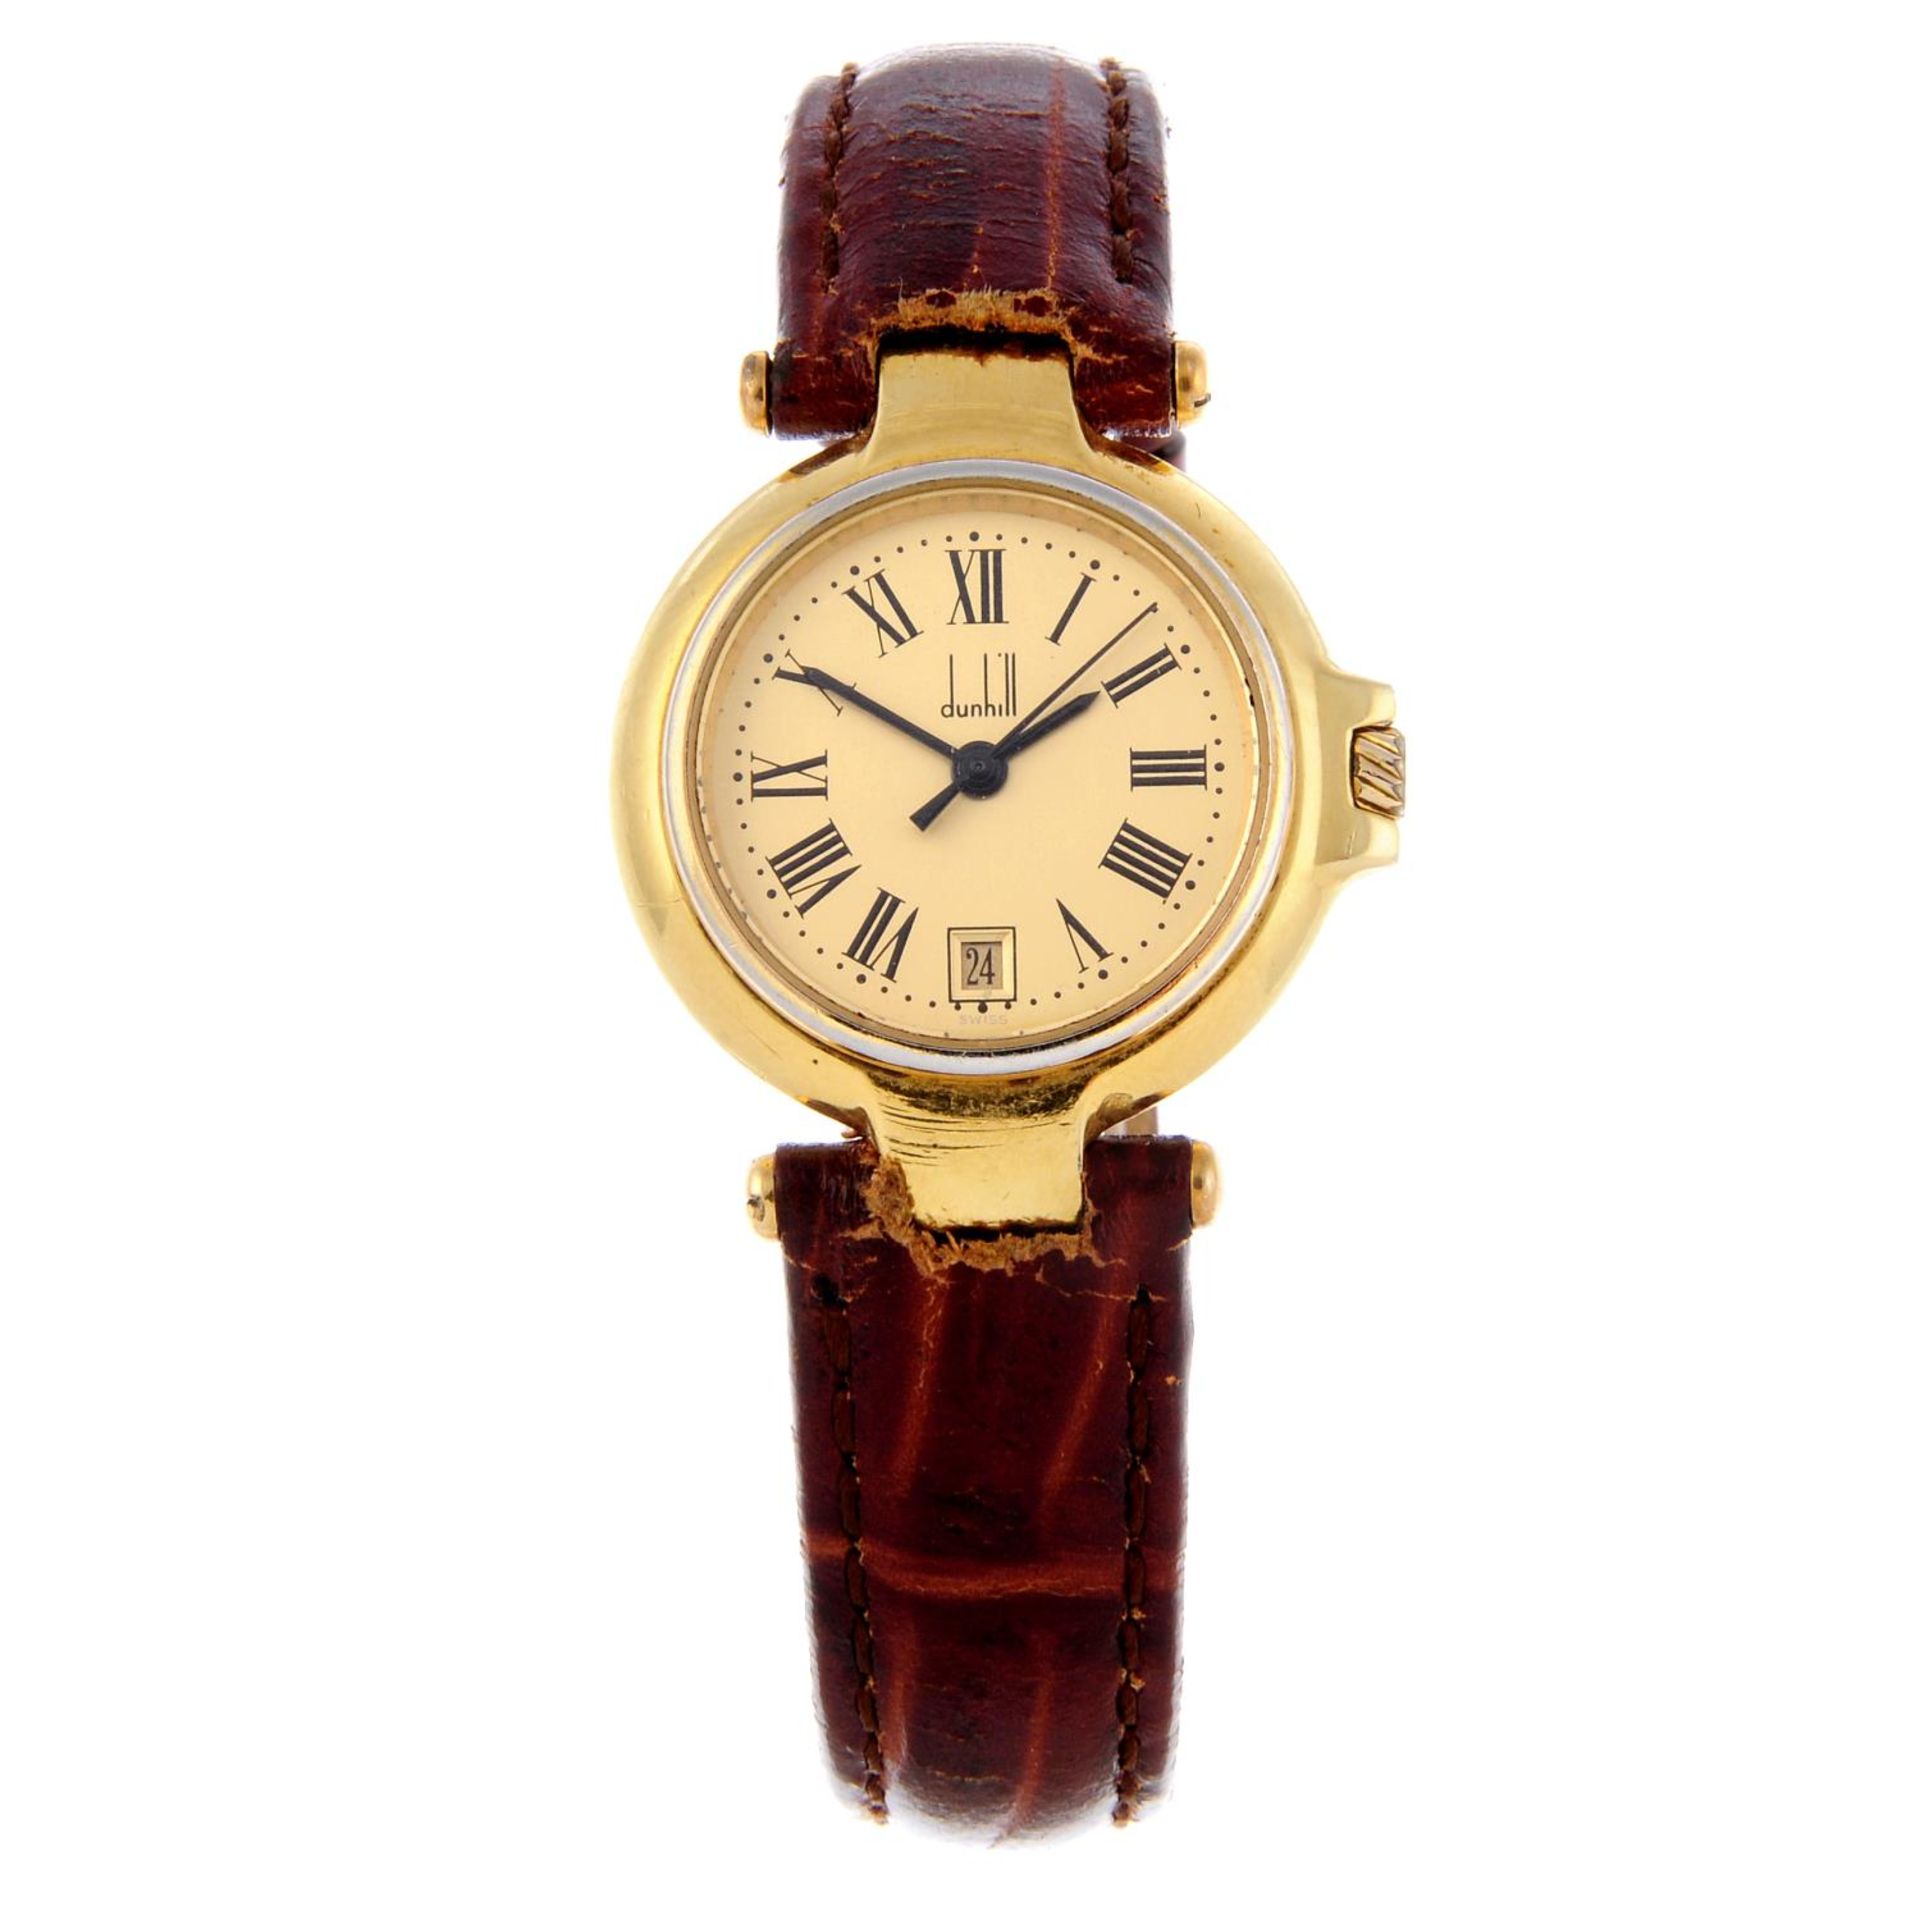 DUNHILL - a lady's Millennium wrist watch.